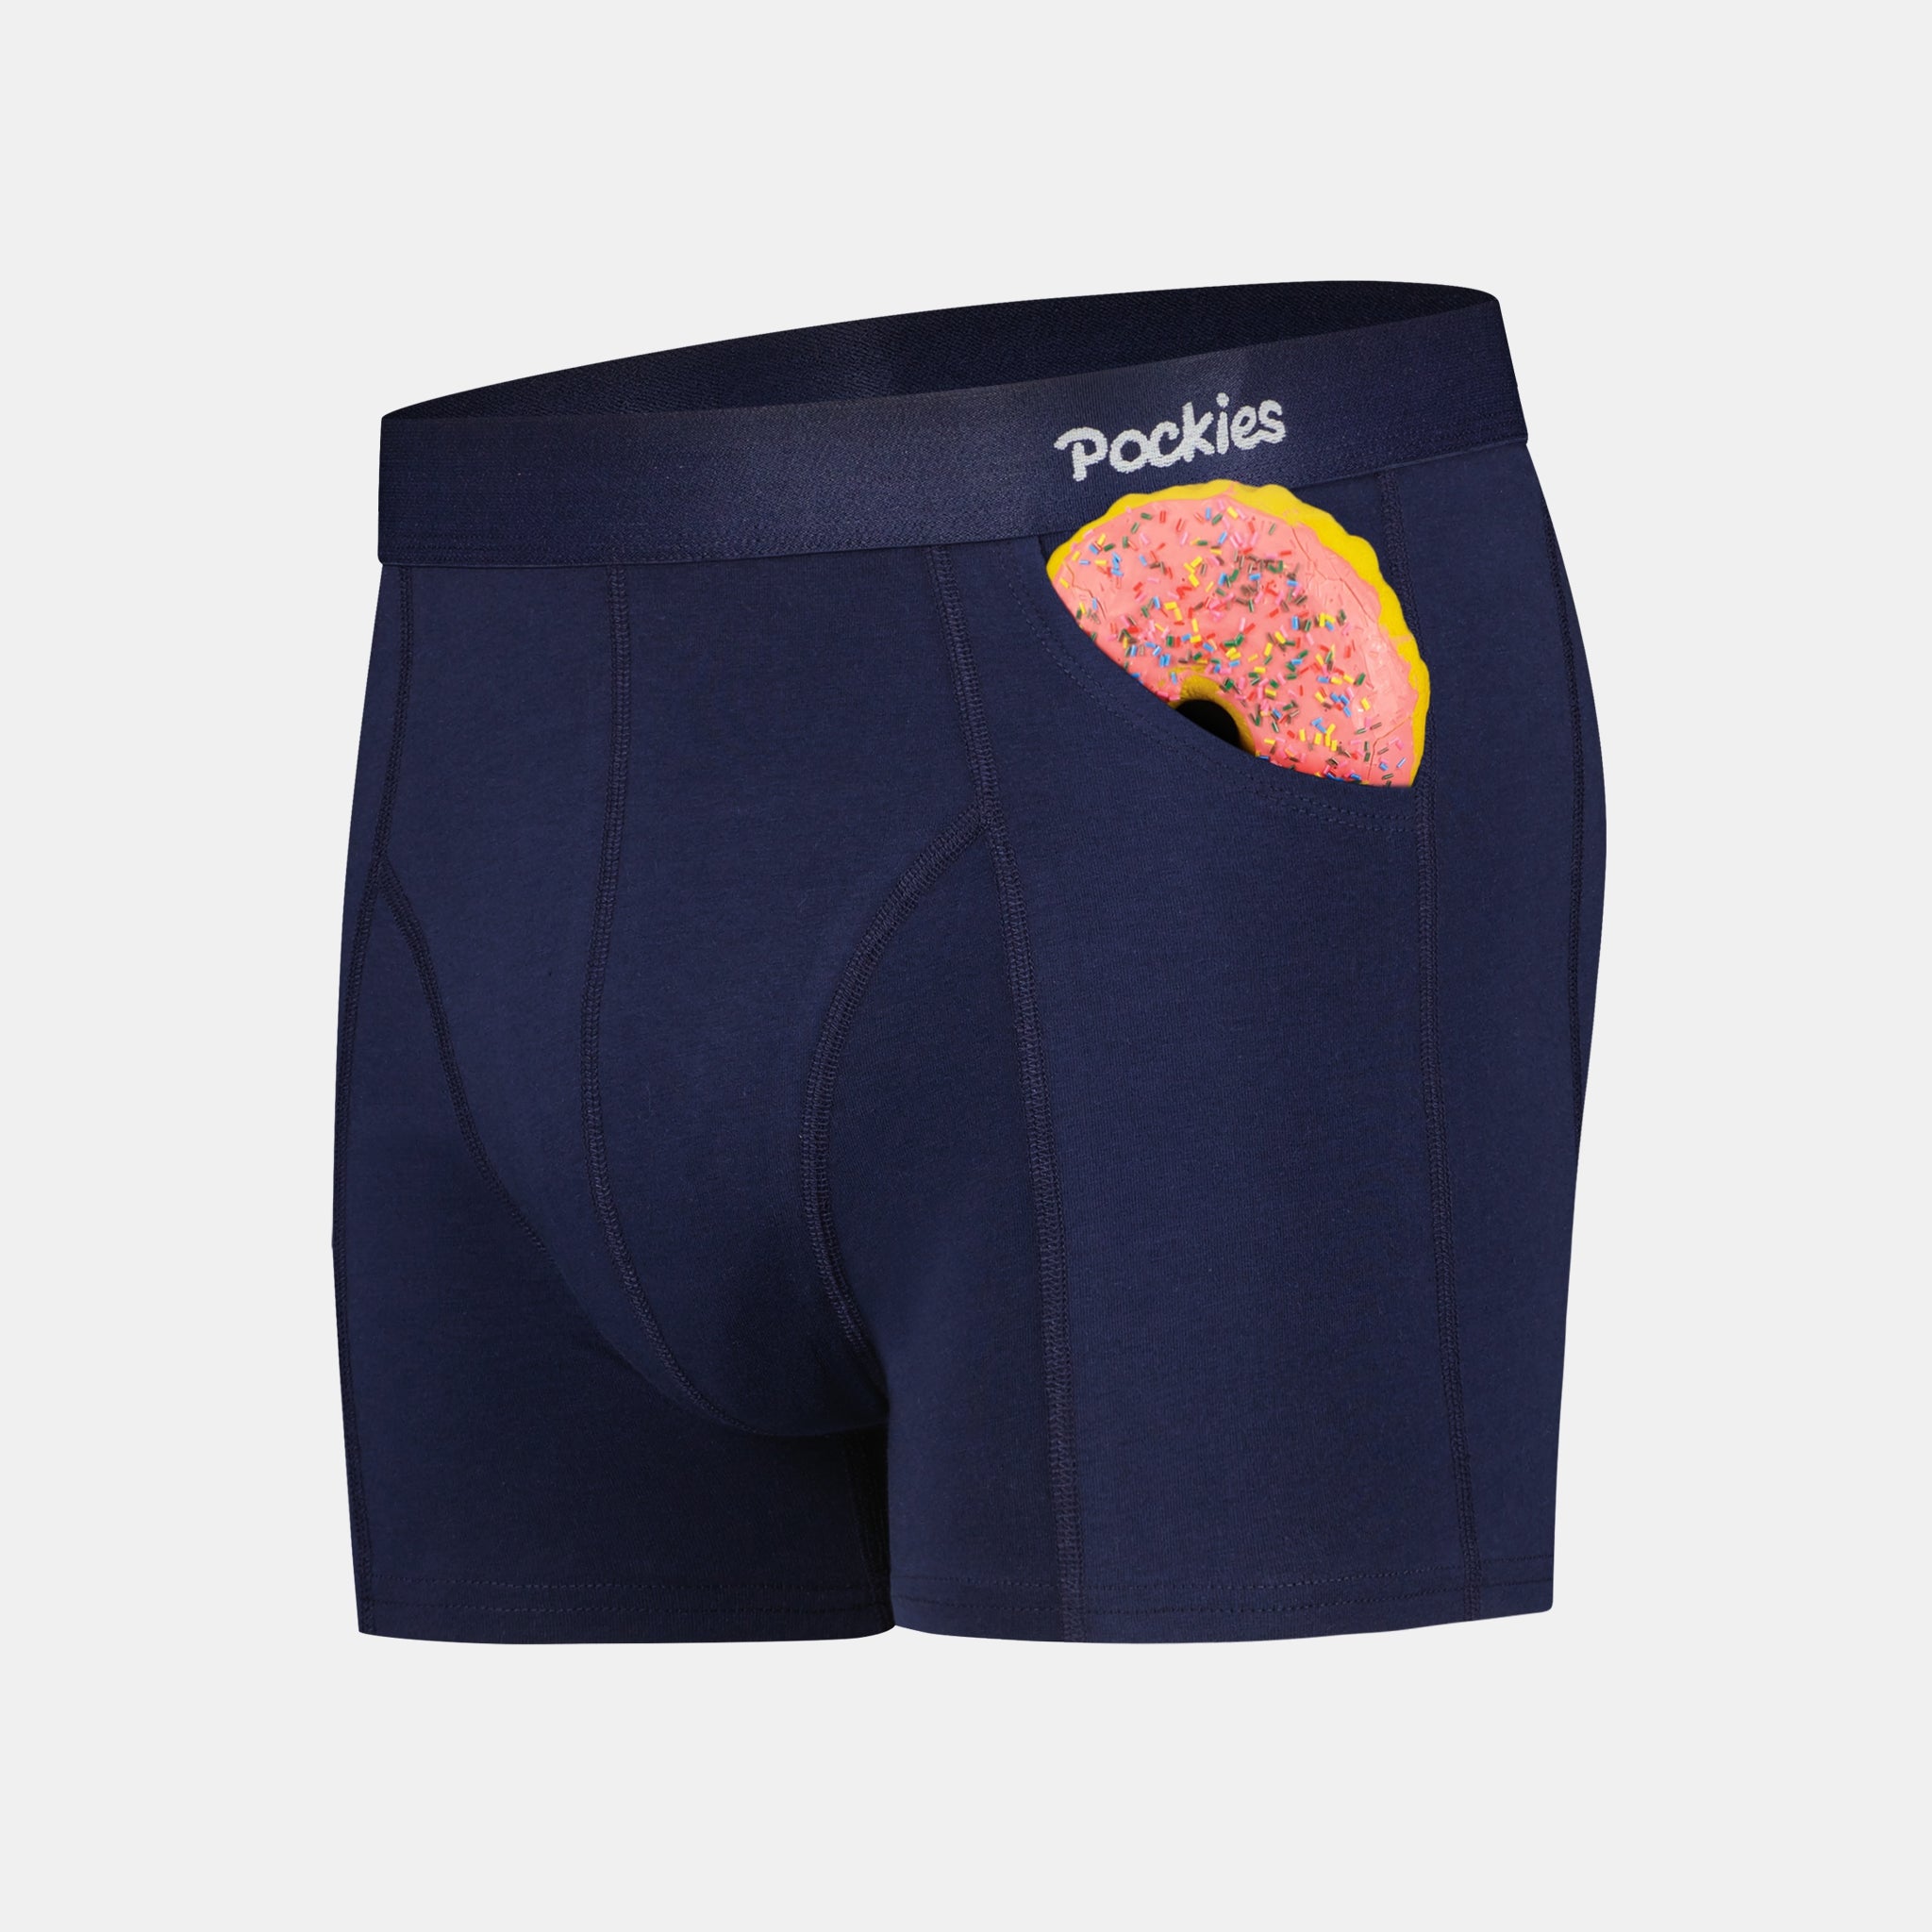 Sport Underwear with Pockets - Boxer Briefs from Pockies